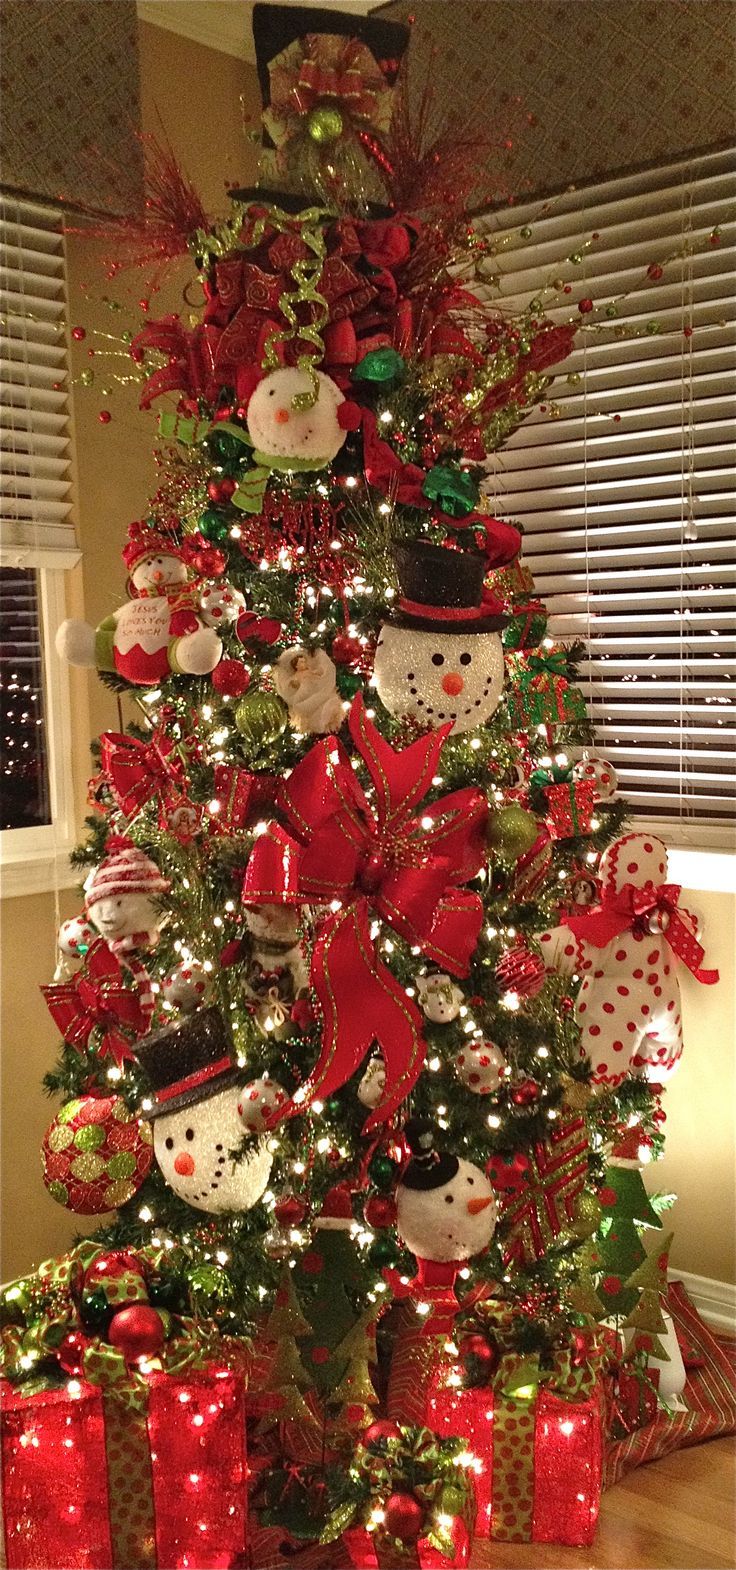 snowman-christmas-tree-ideas